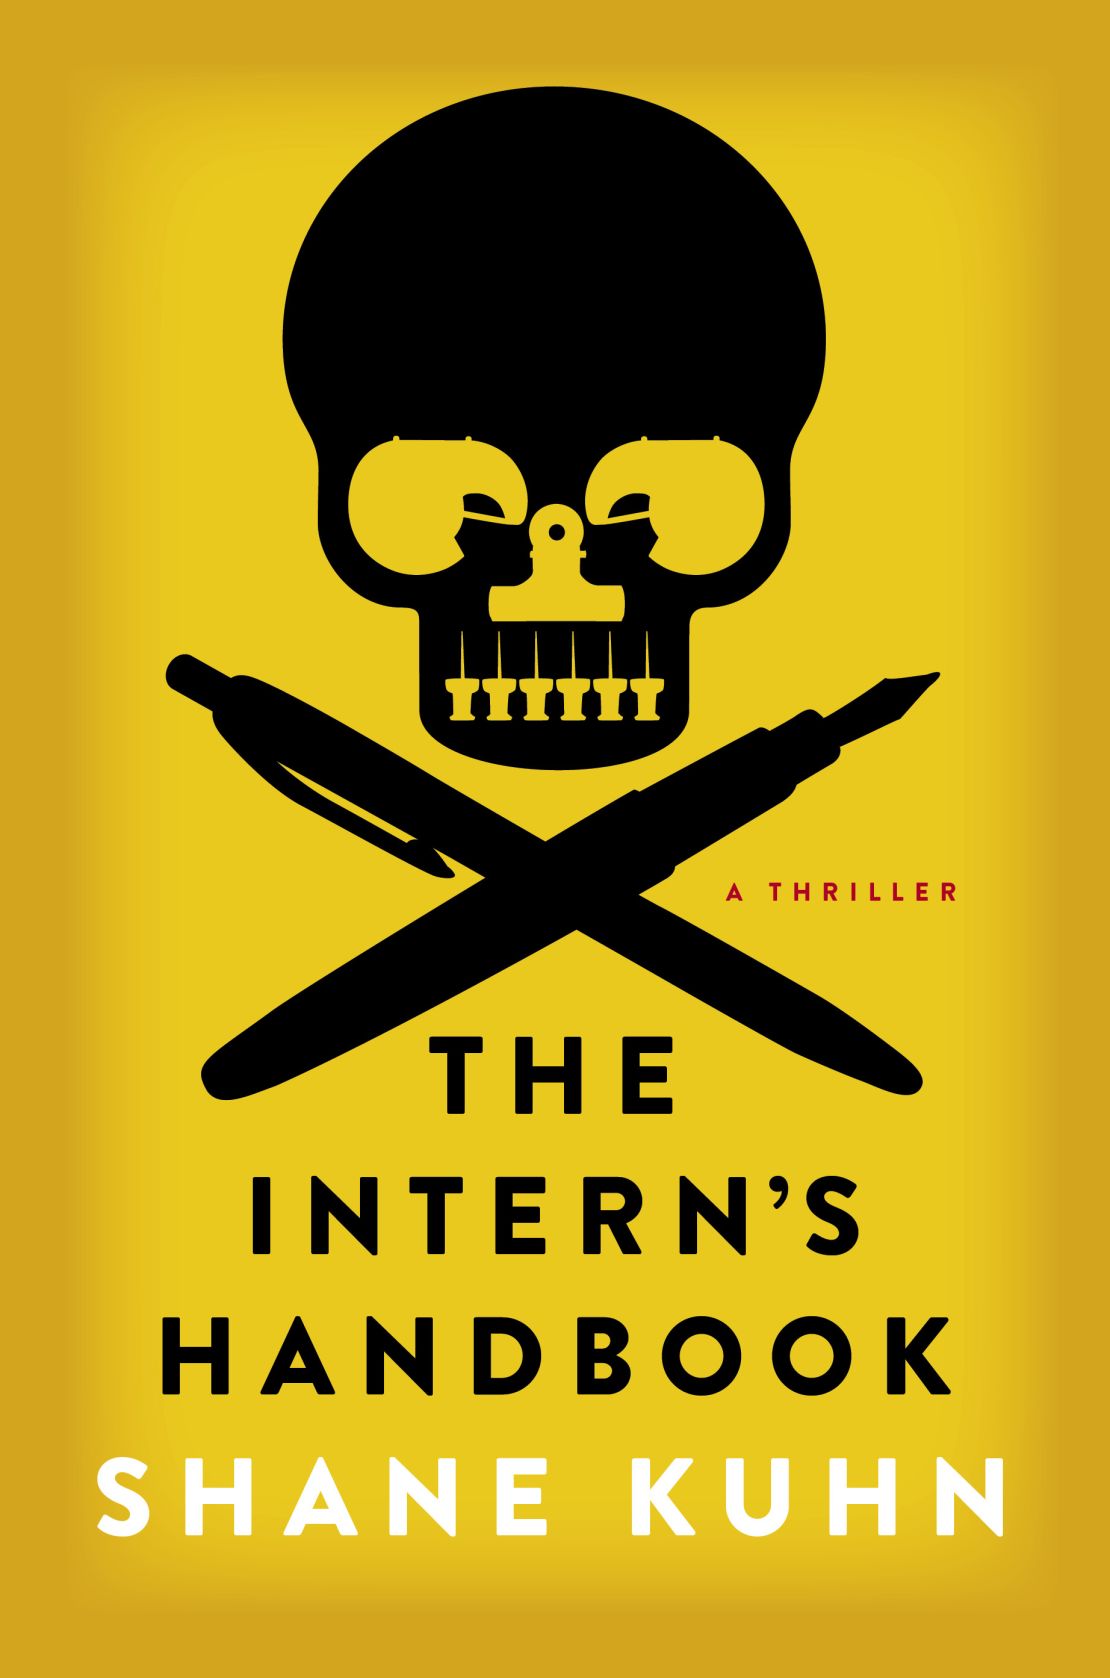 "The Intern's Handbook" is author Shane Kuhn's first novel.